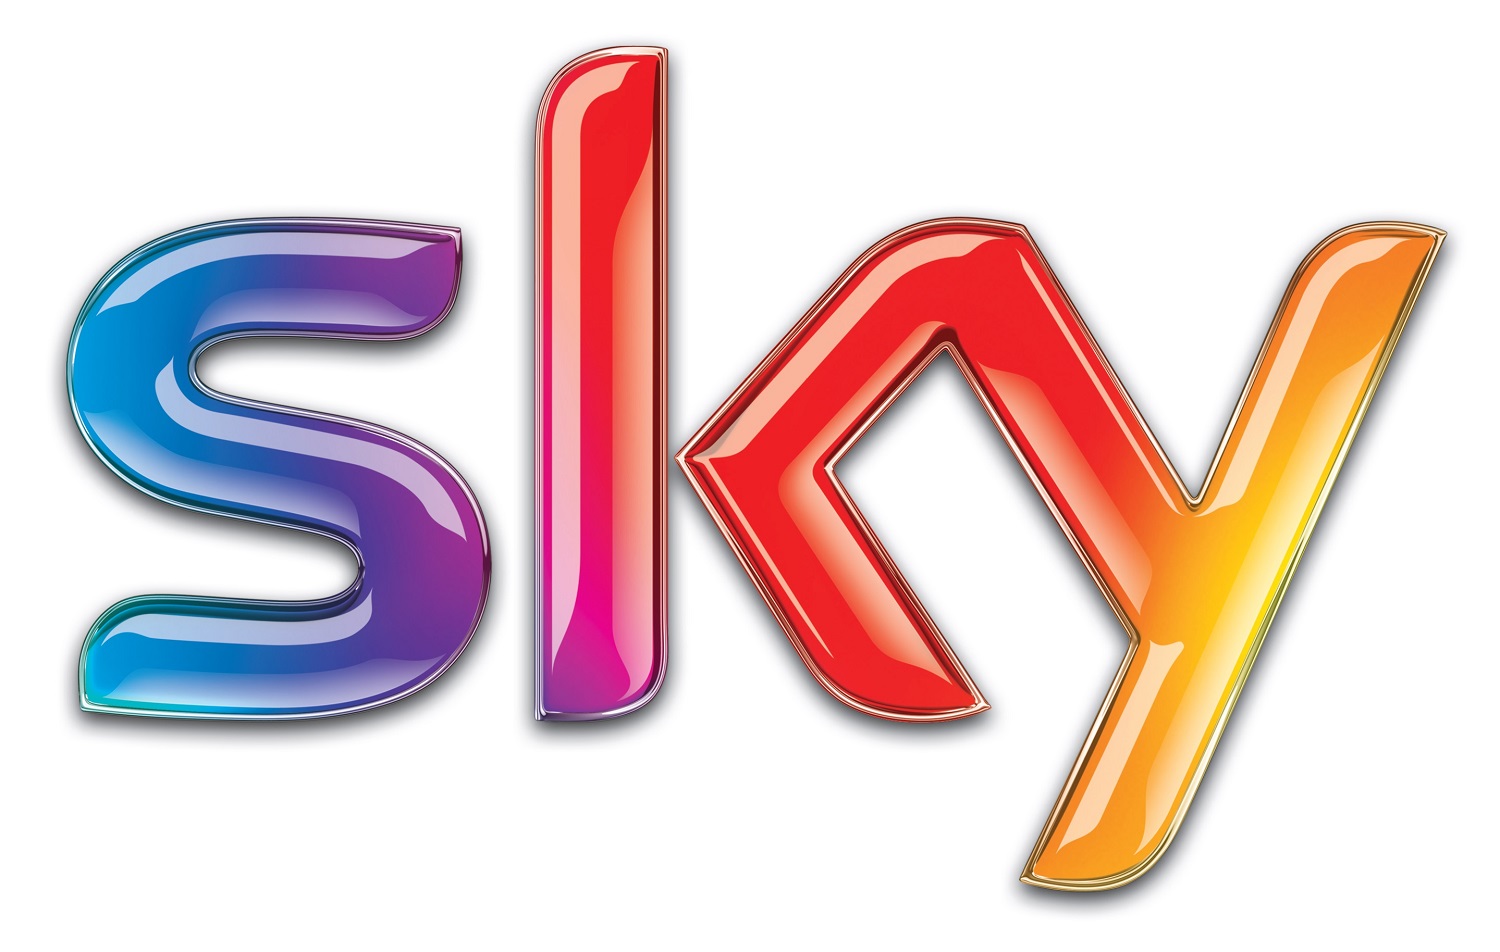 Sky Italia will broadcast the inaugural Baku 2015 European Games ©Sky